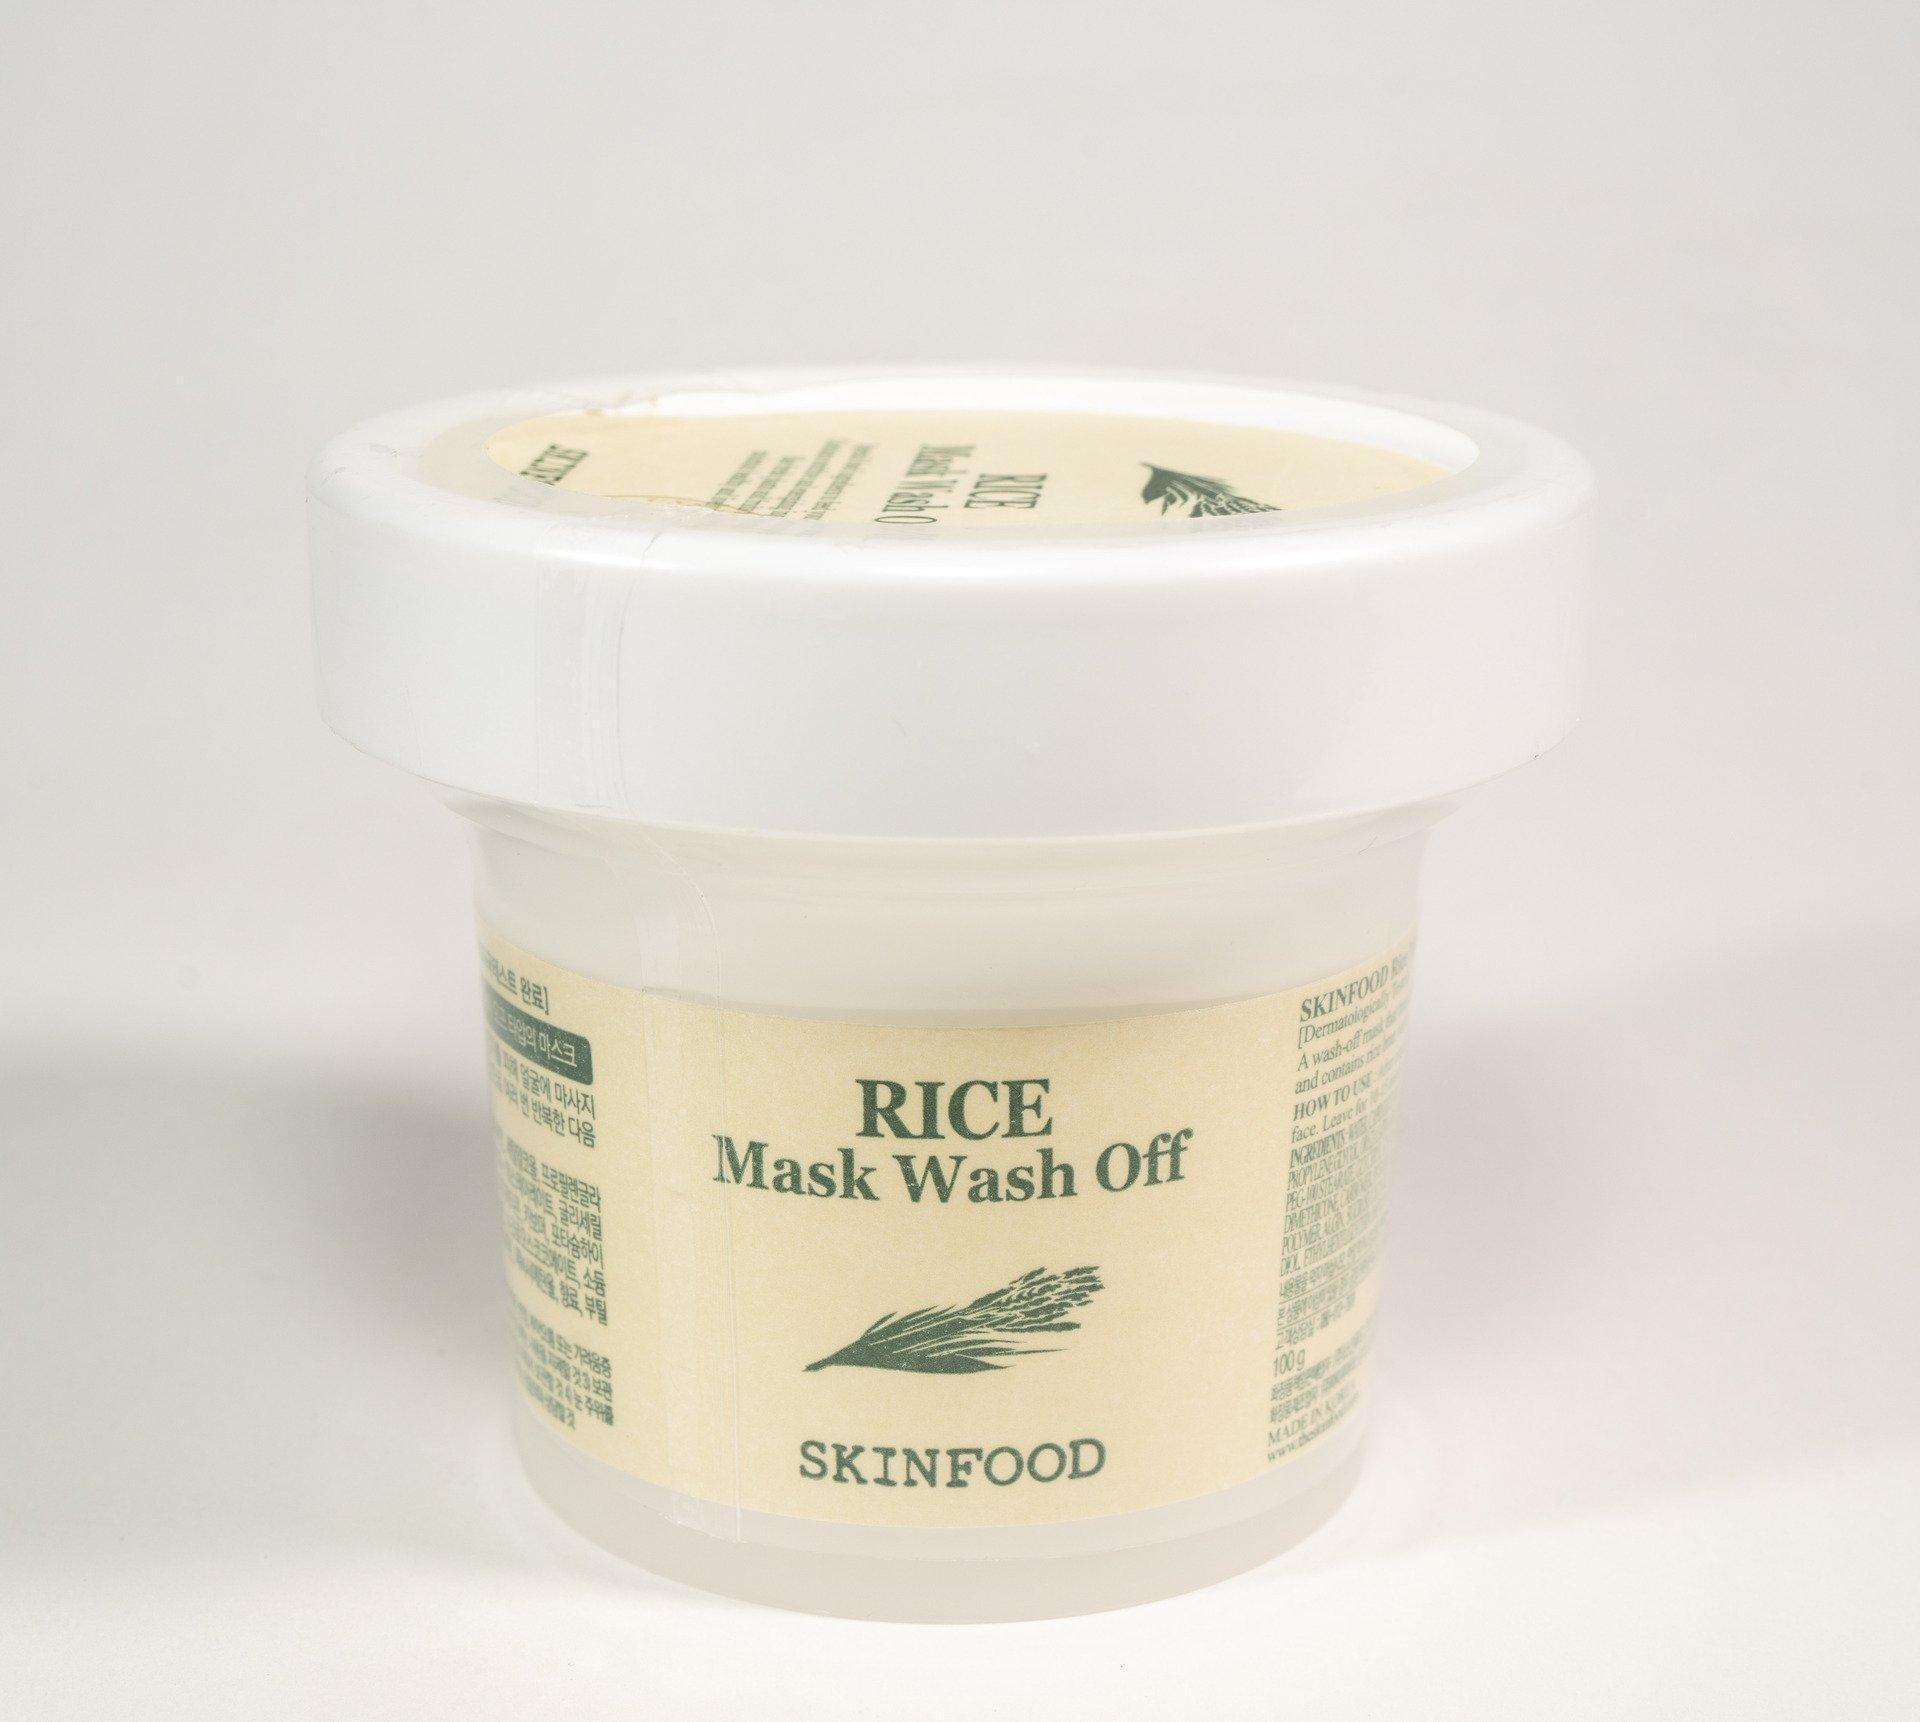 SKINFOOD Rice Mask Wash Off 100g